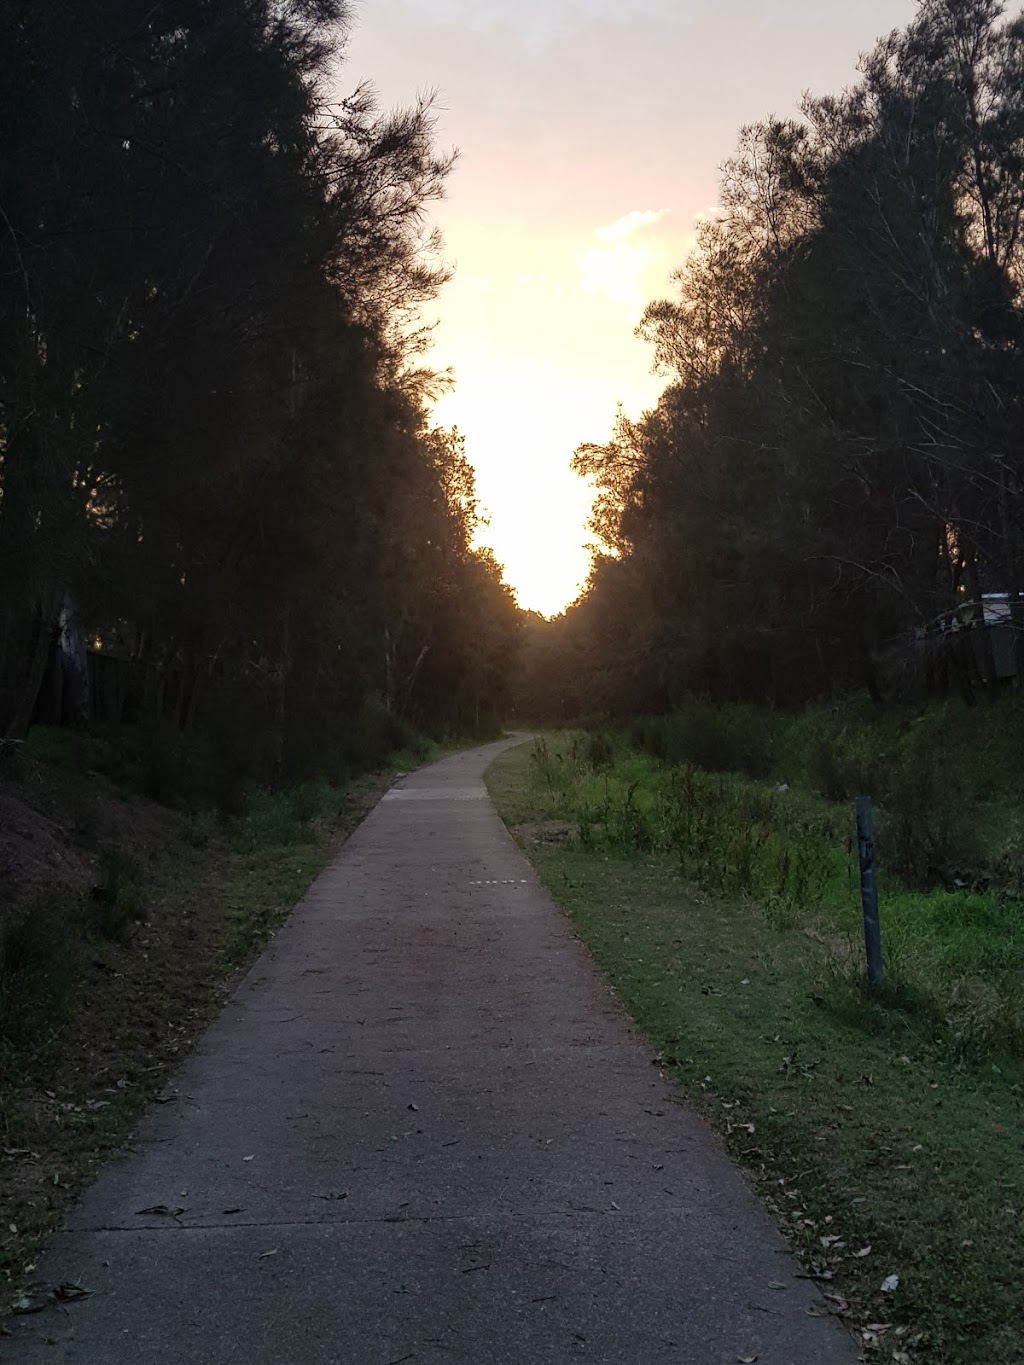 Girraween Park | park | Octavia Road to, Toongabbie Rd, Girraween NSW 2145, Australia